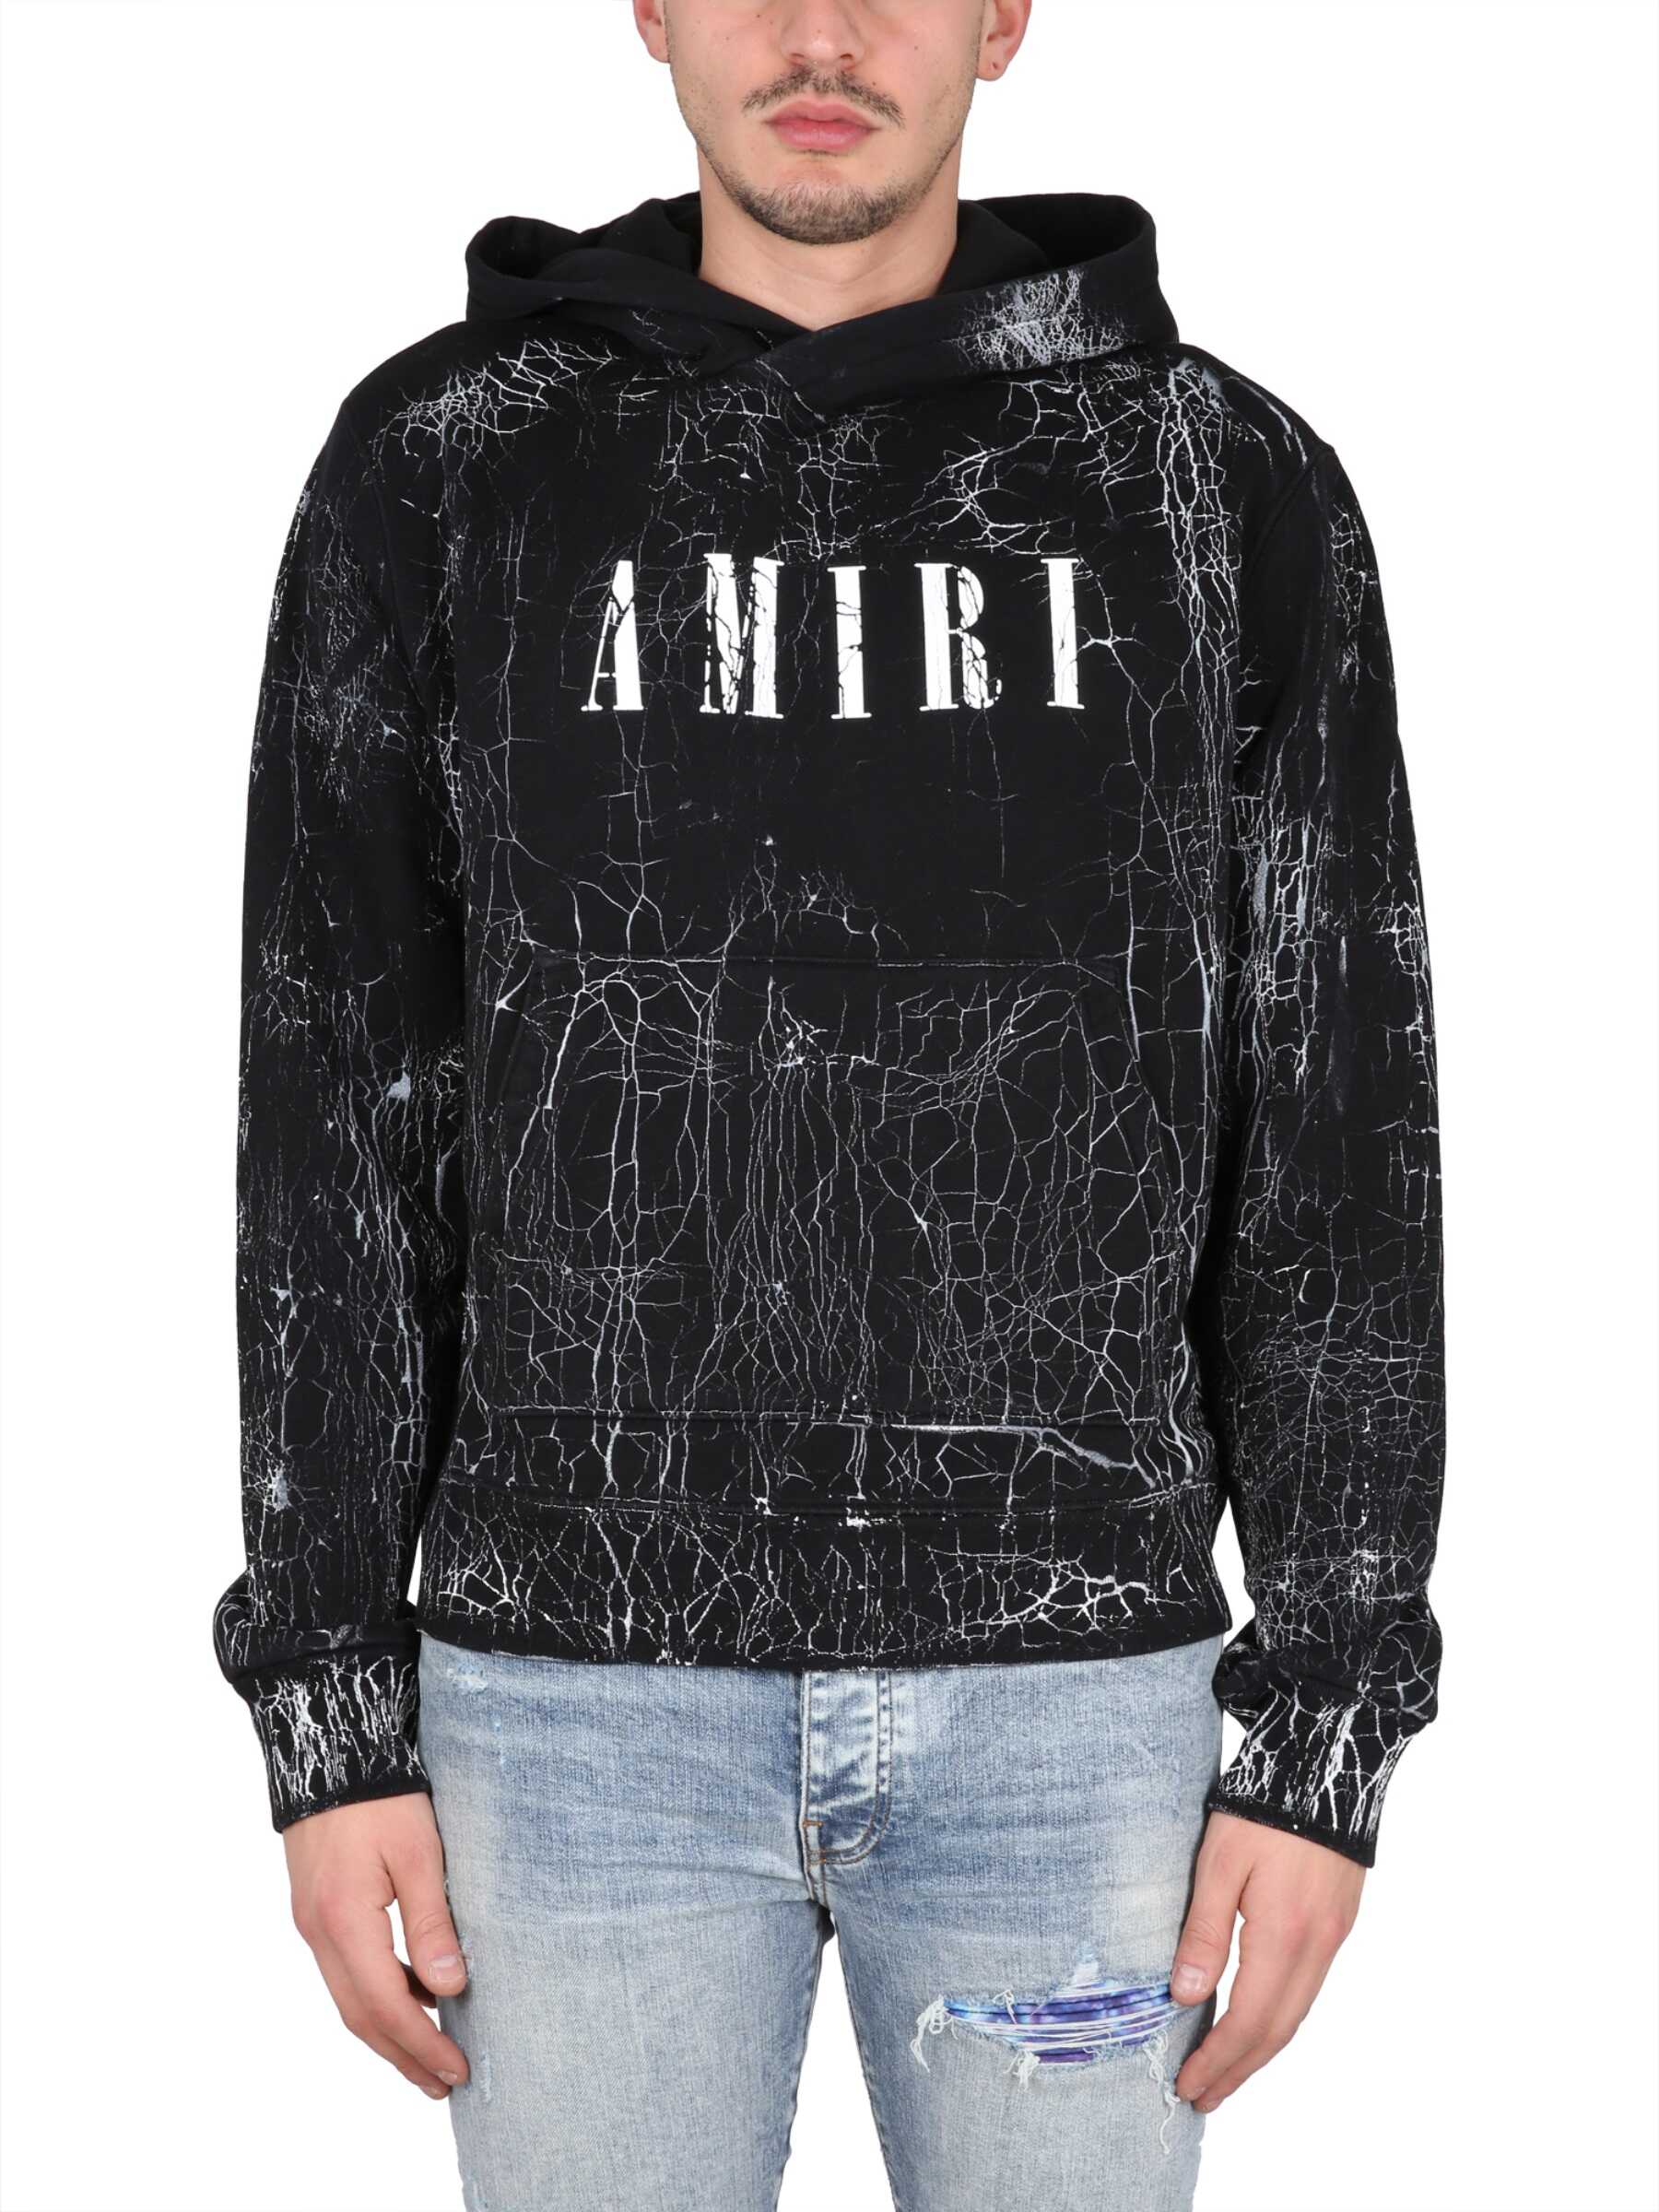 AMIRI Cracked Sweatshirt BLACK